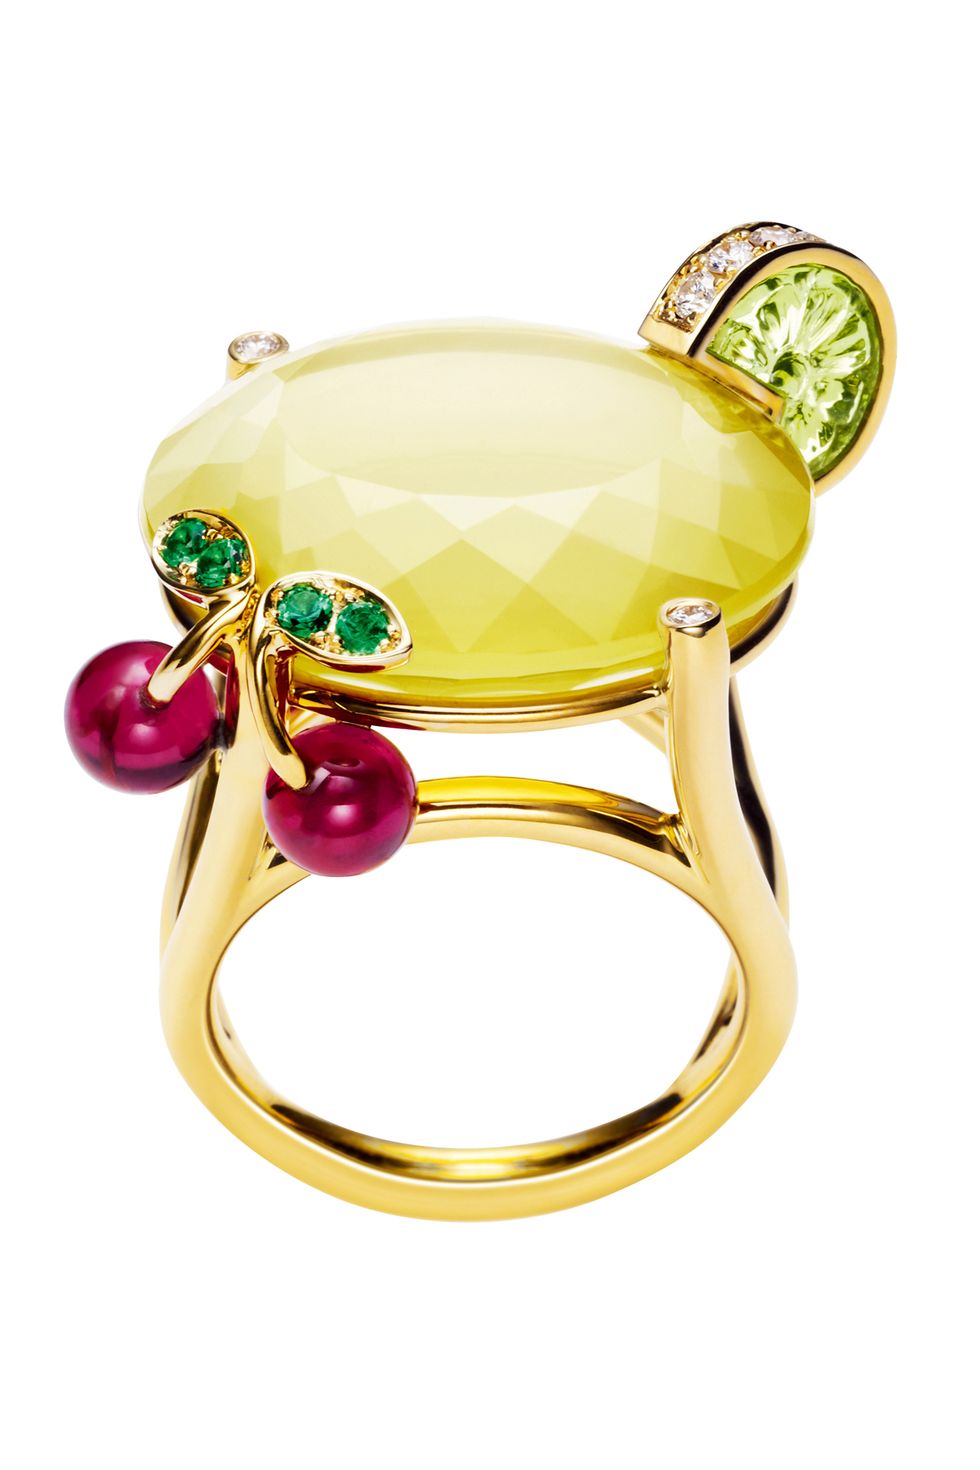 Jewellery, Fashion accessory, Ring, Gemstone, Yellow, Engagement ring, Ruby, Emerald, Body jewelry, Magenta, 